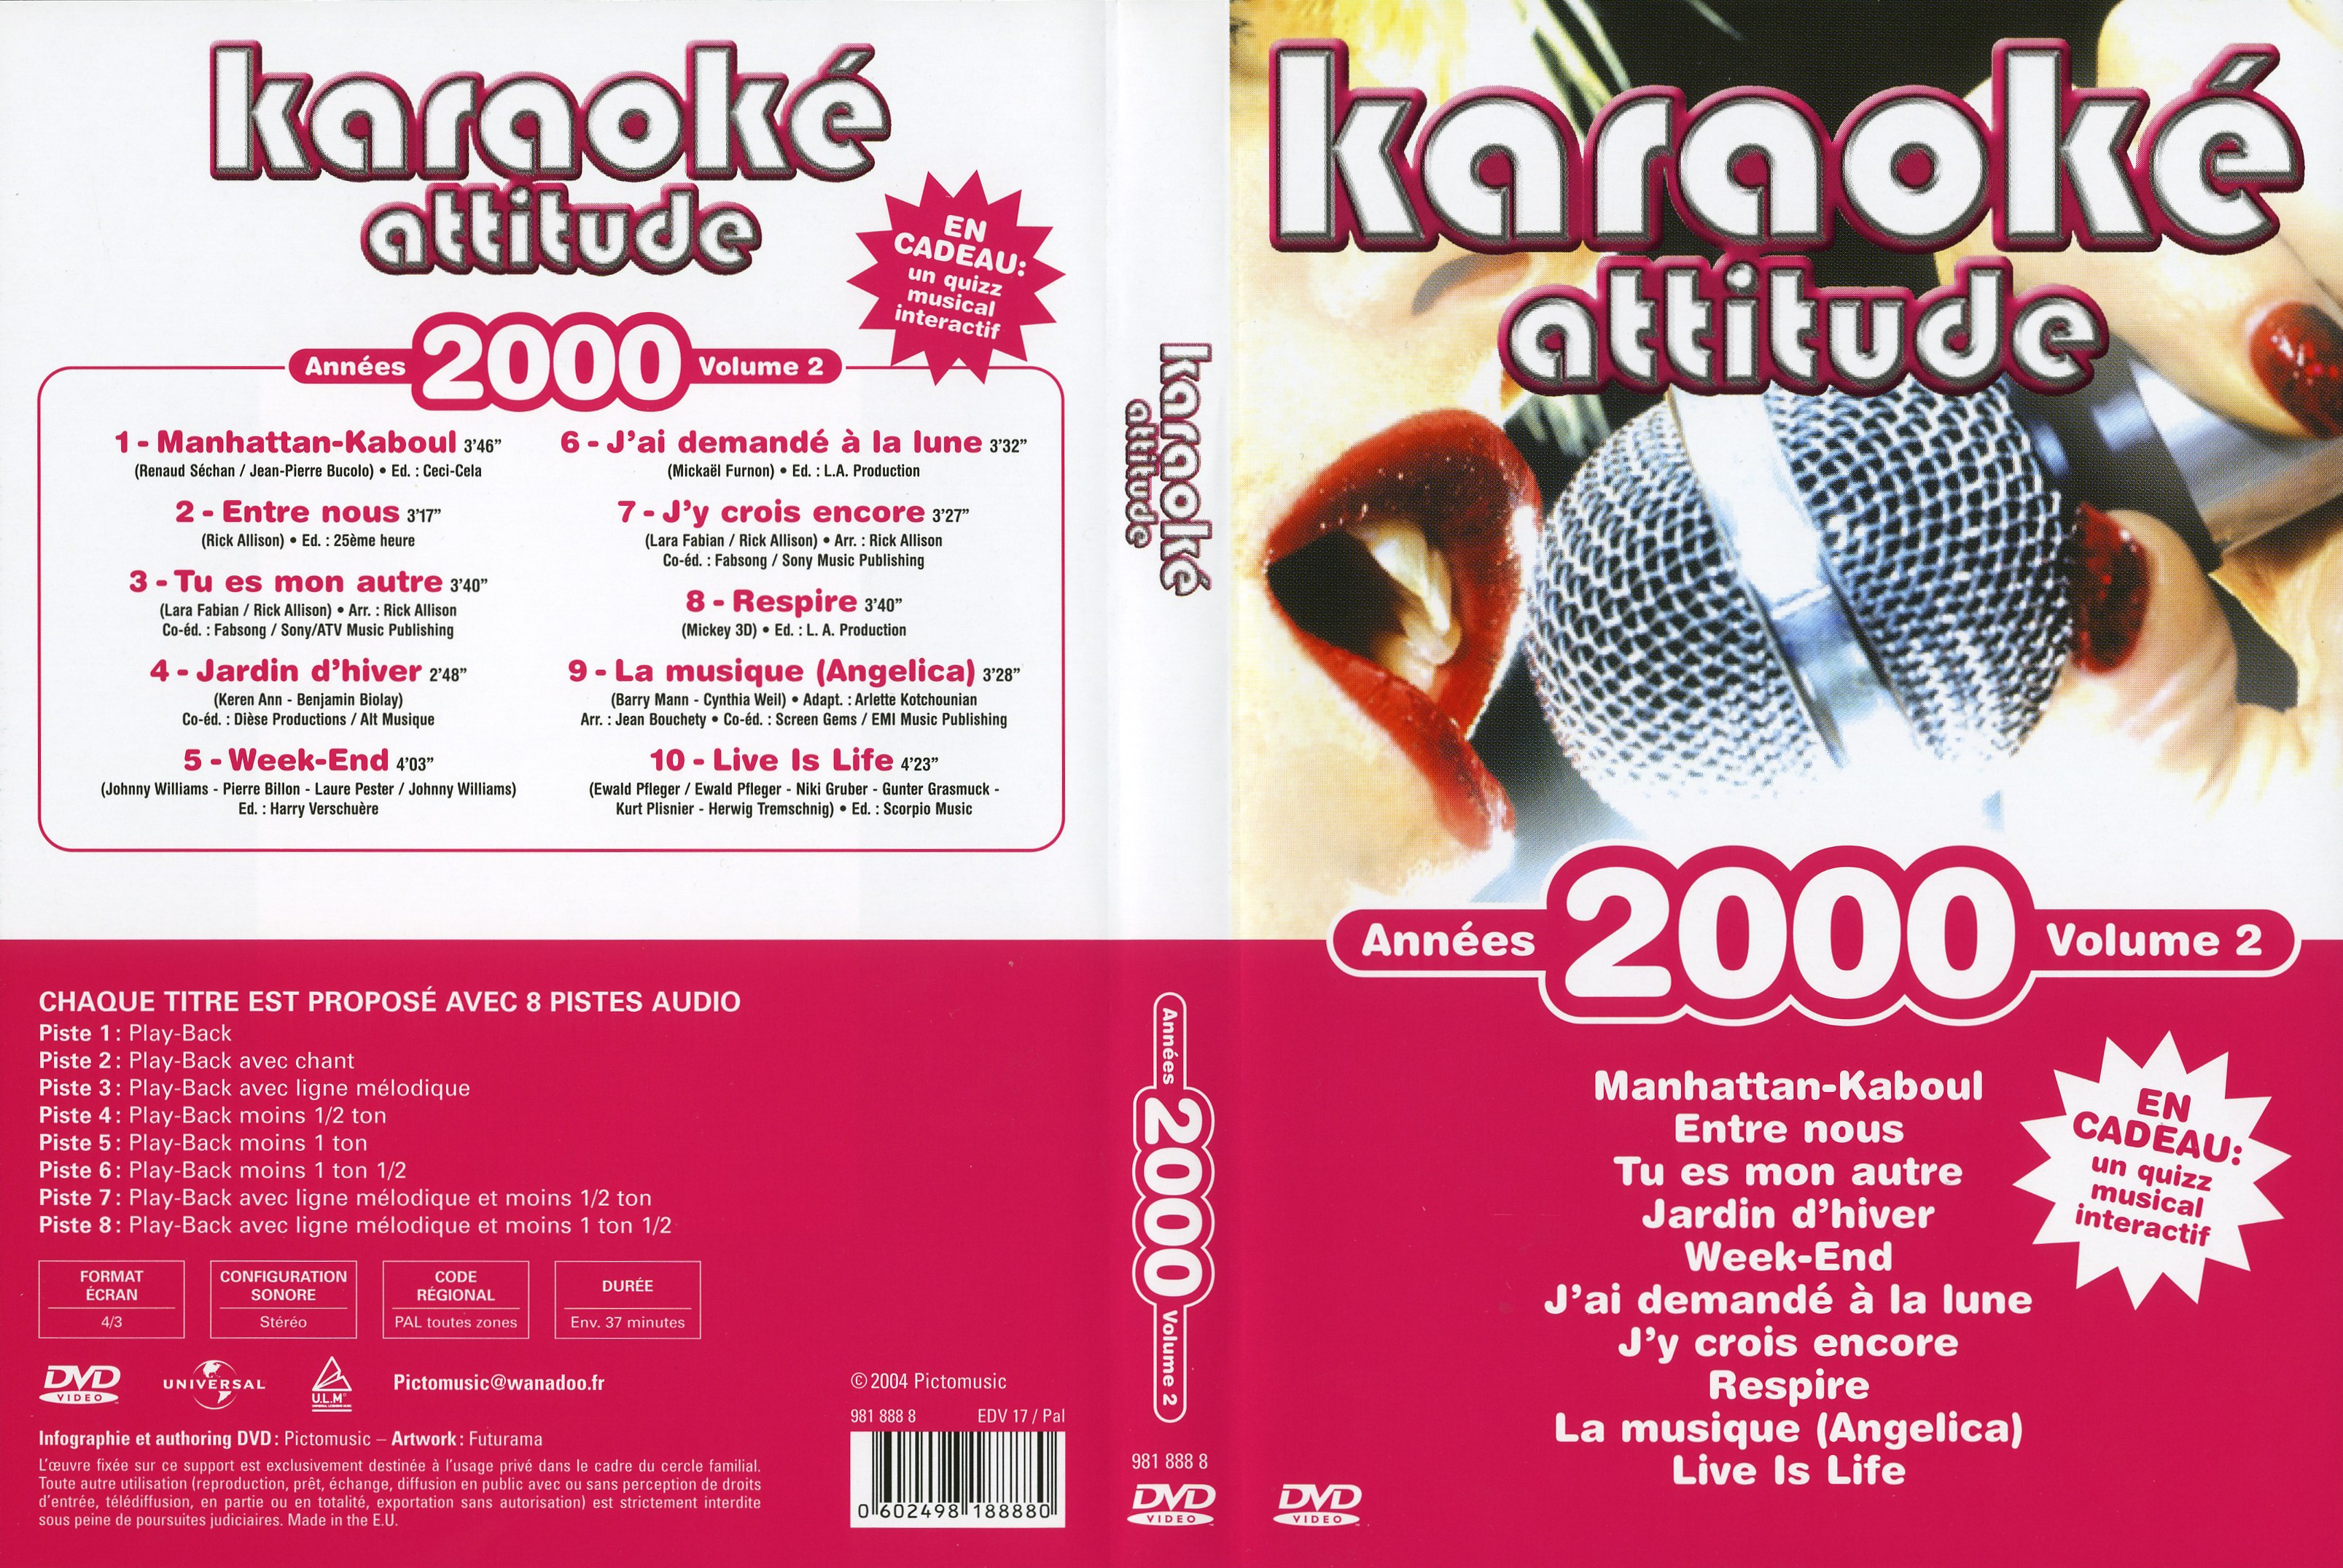 Jaquette DVD Karaok Attitude Annes 2000 vol 2